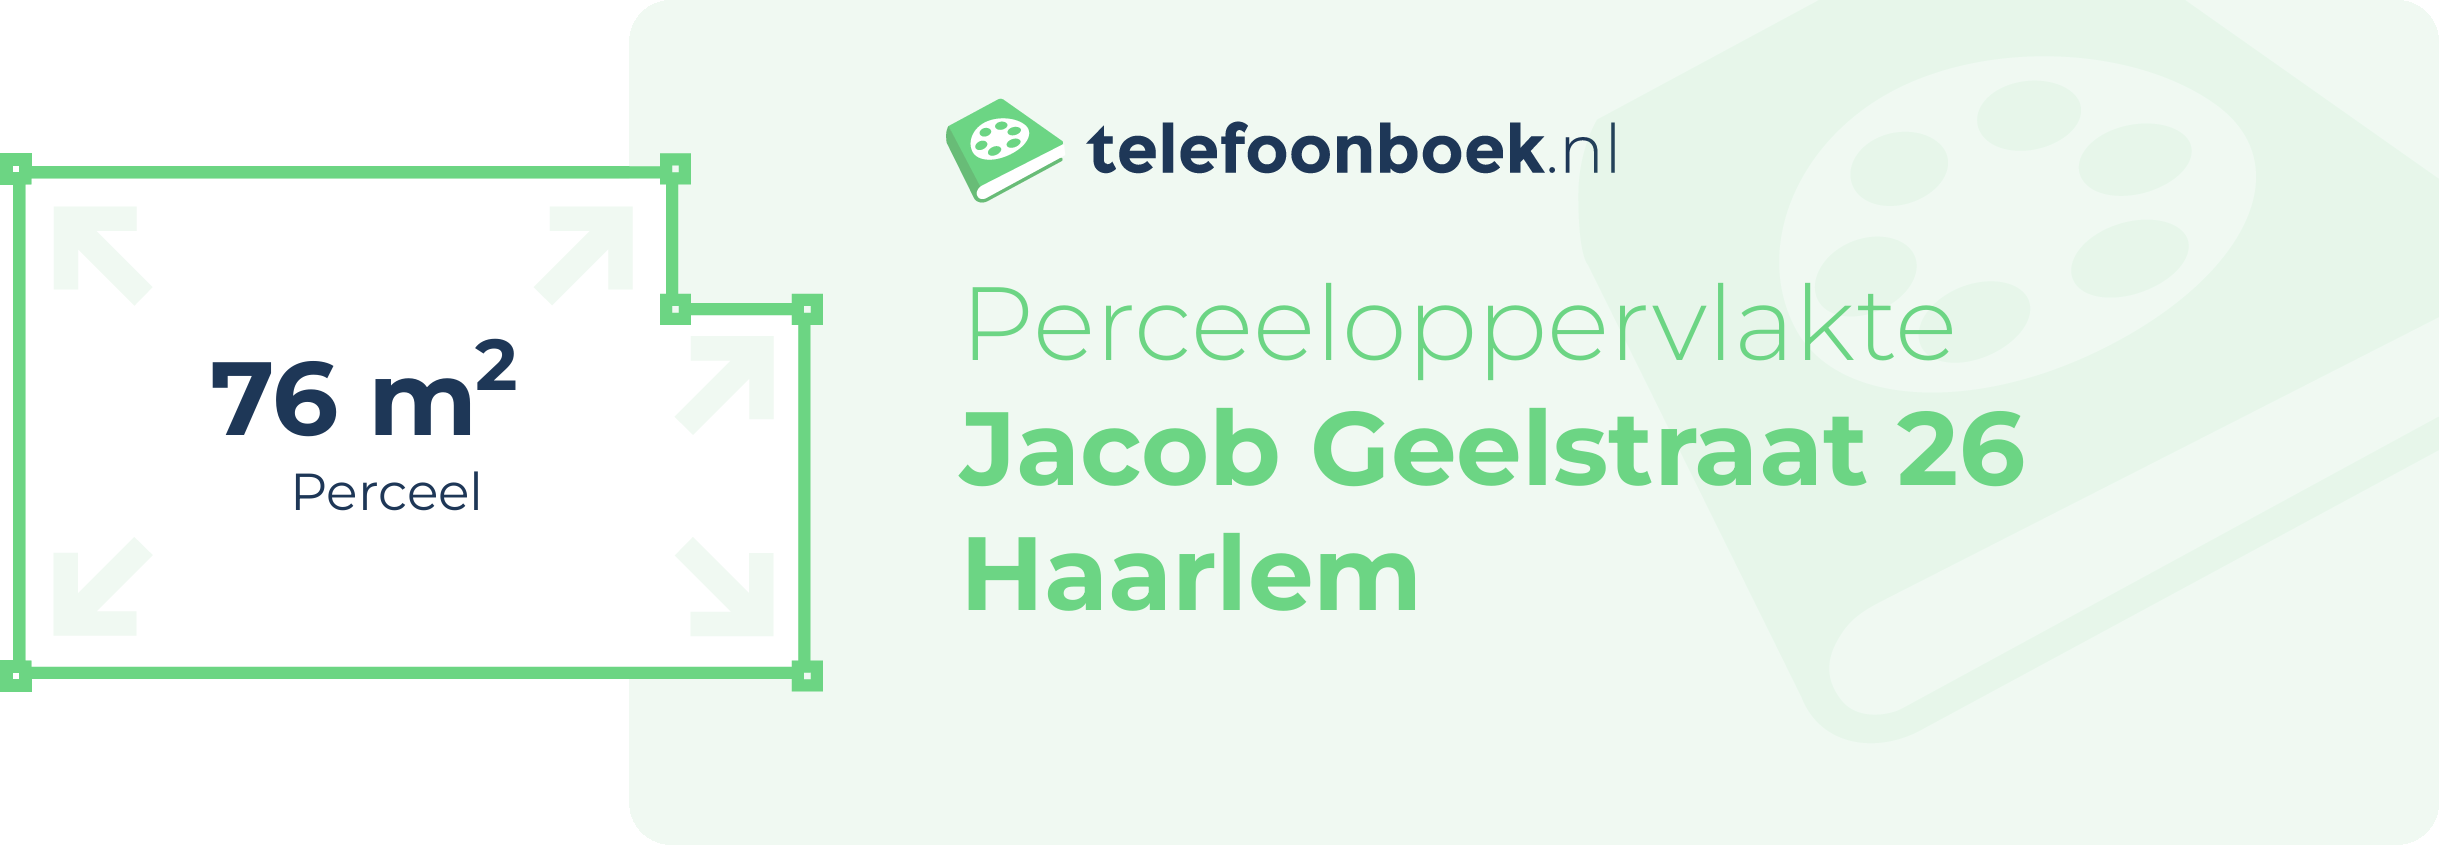 Perceeloppervlakte Jacob Geelstraat 26 Haarlem